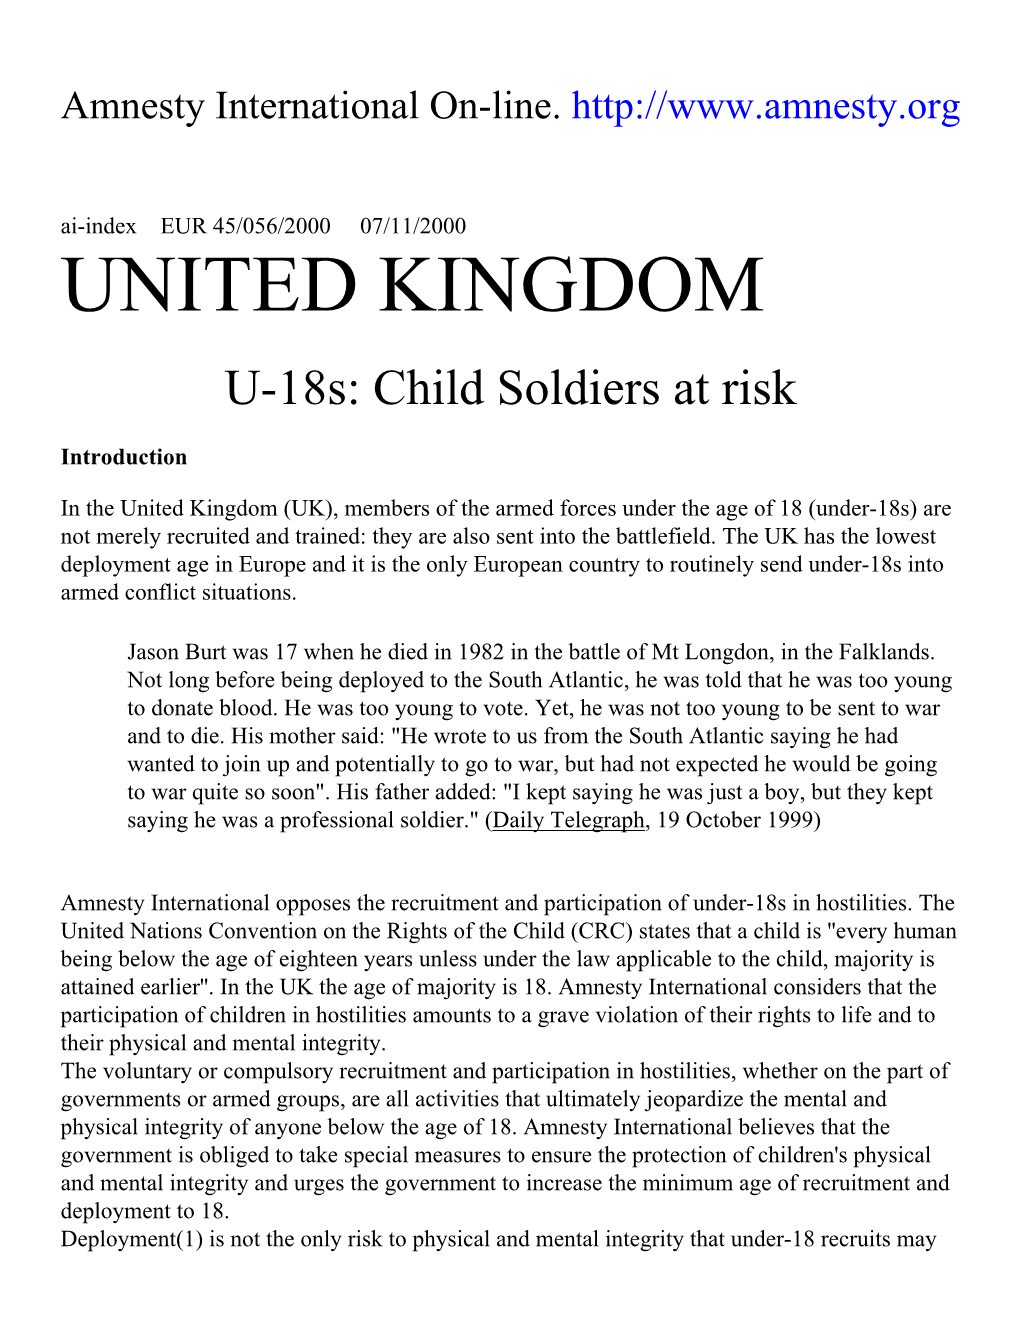 UNITED KINGDOM U-18S: Child Soldiers at Risk